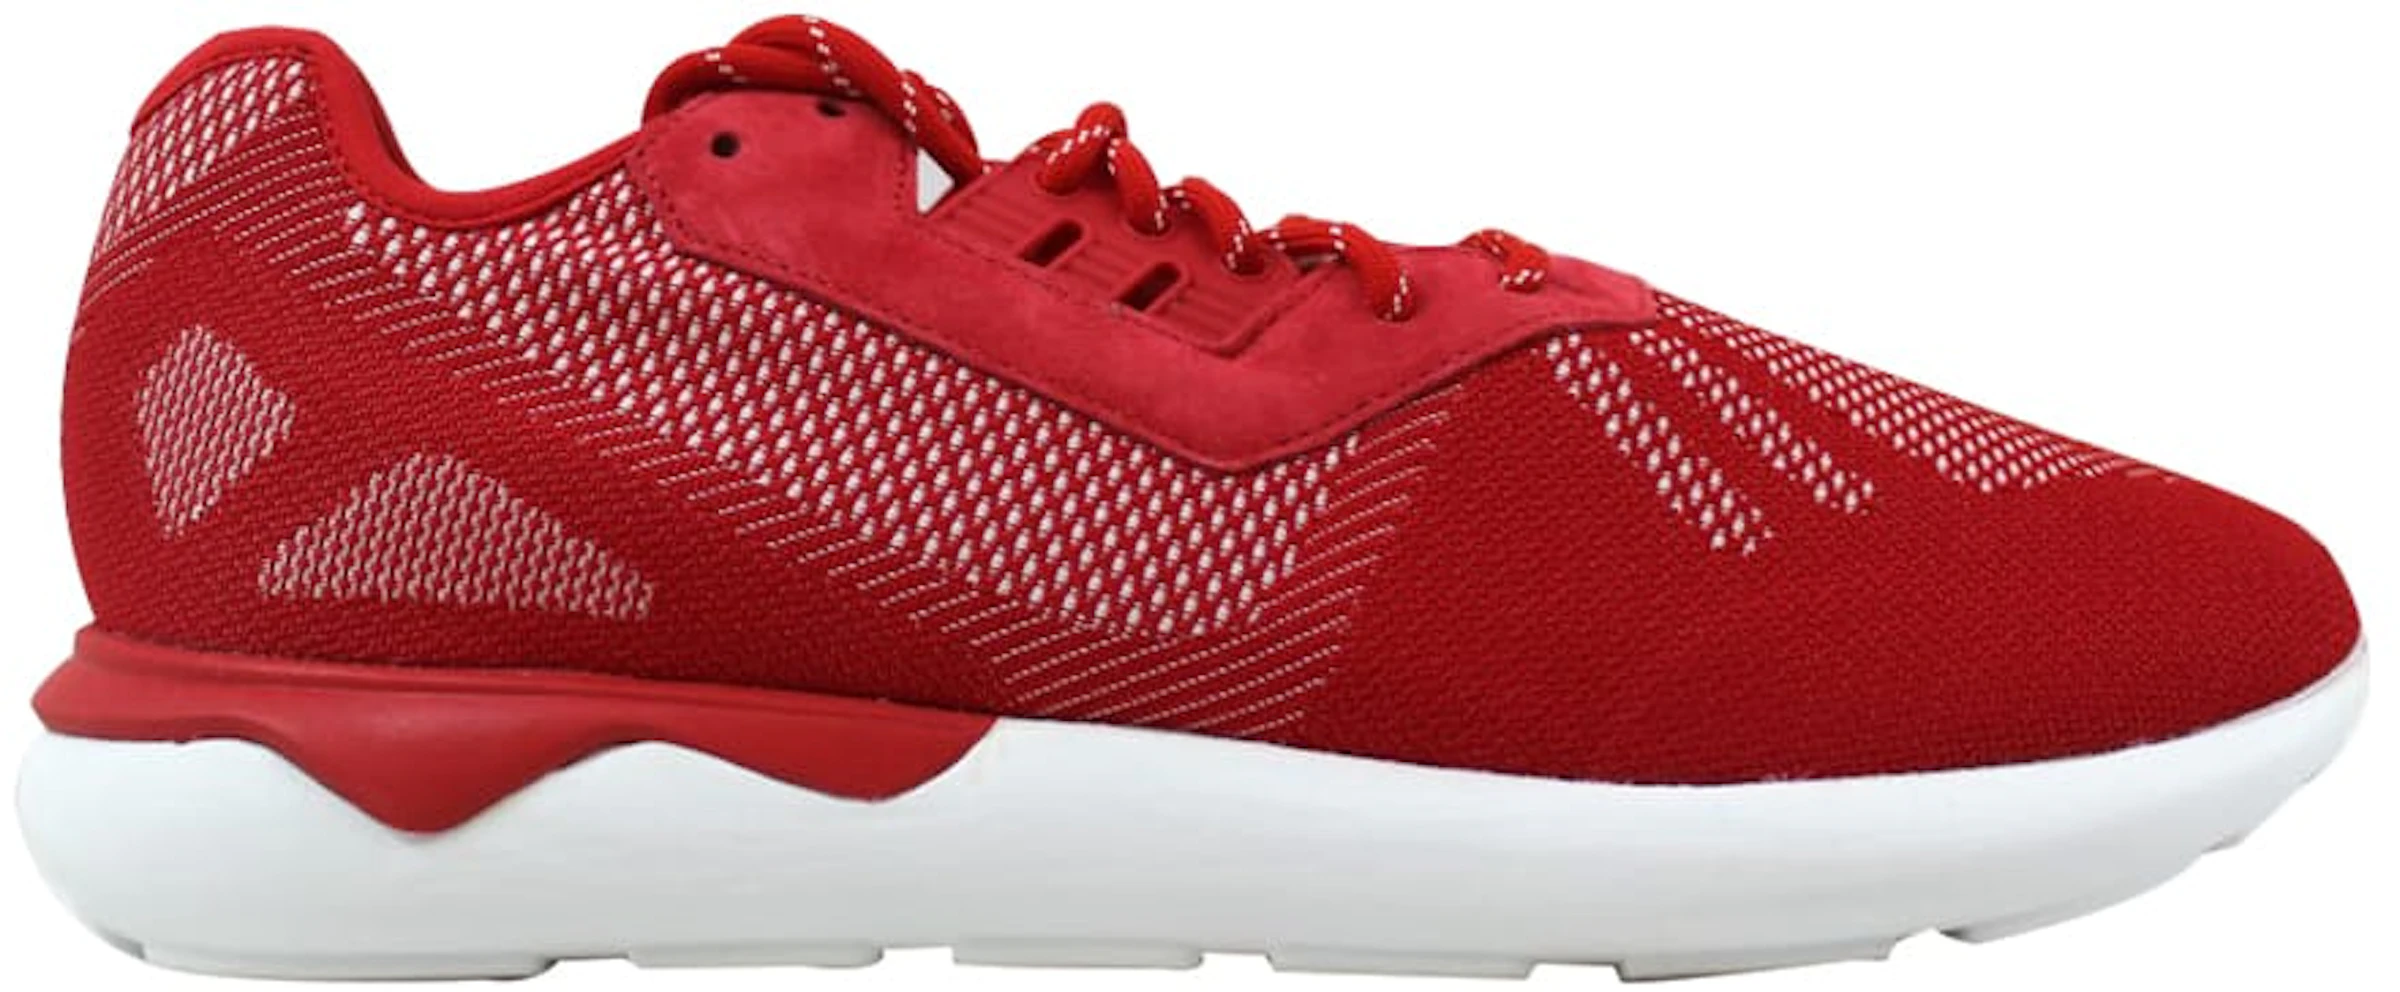 adidas Tubular Runner Weave Scarlet Red/White - B25597 -